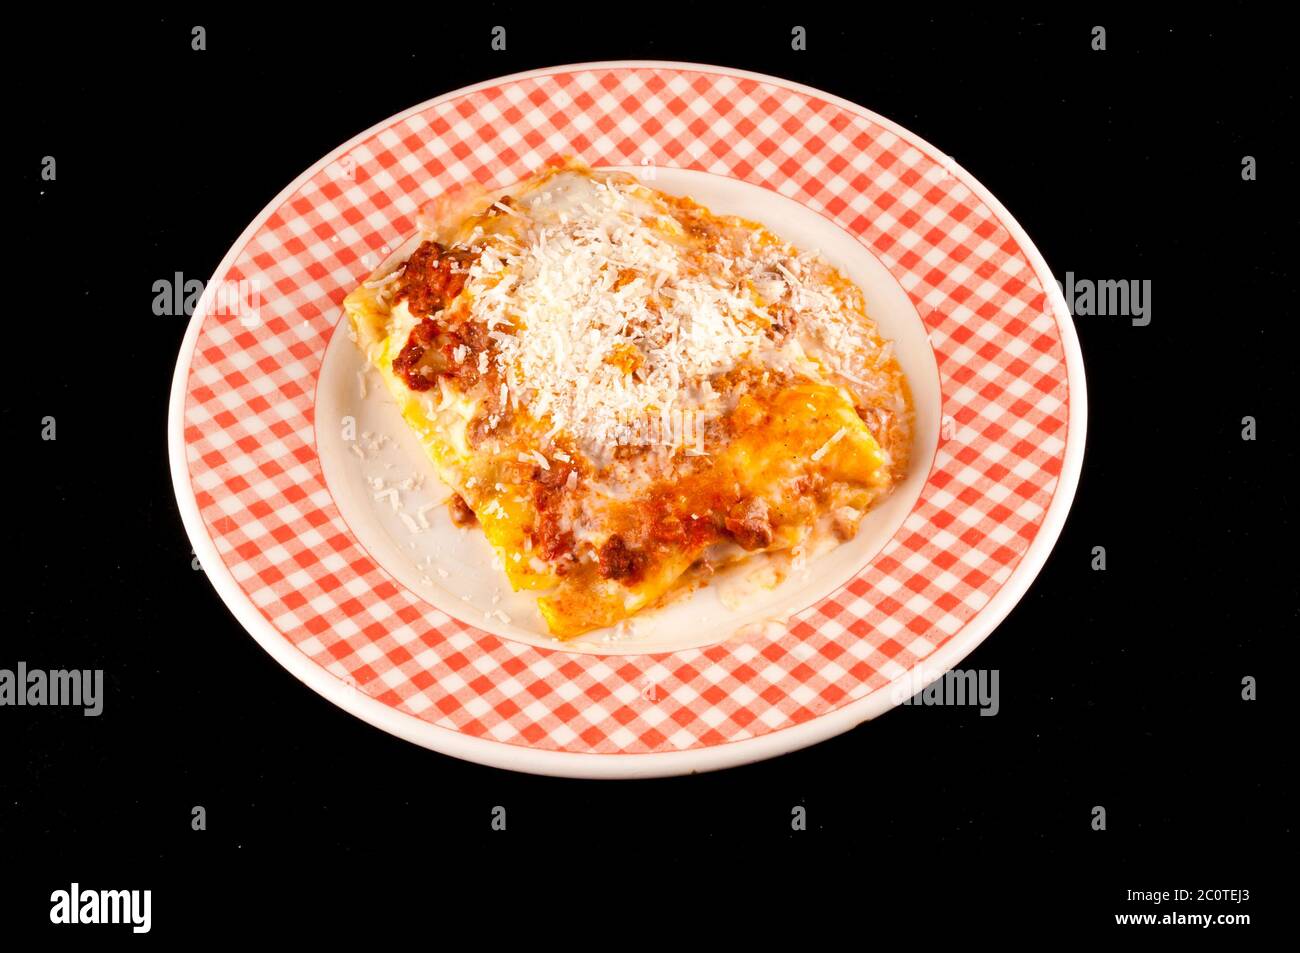 Italian Style Pasta Food 2C0TEJ3 